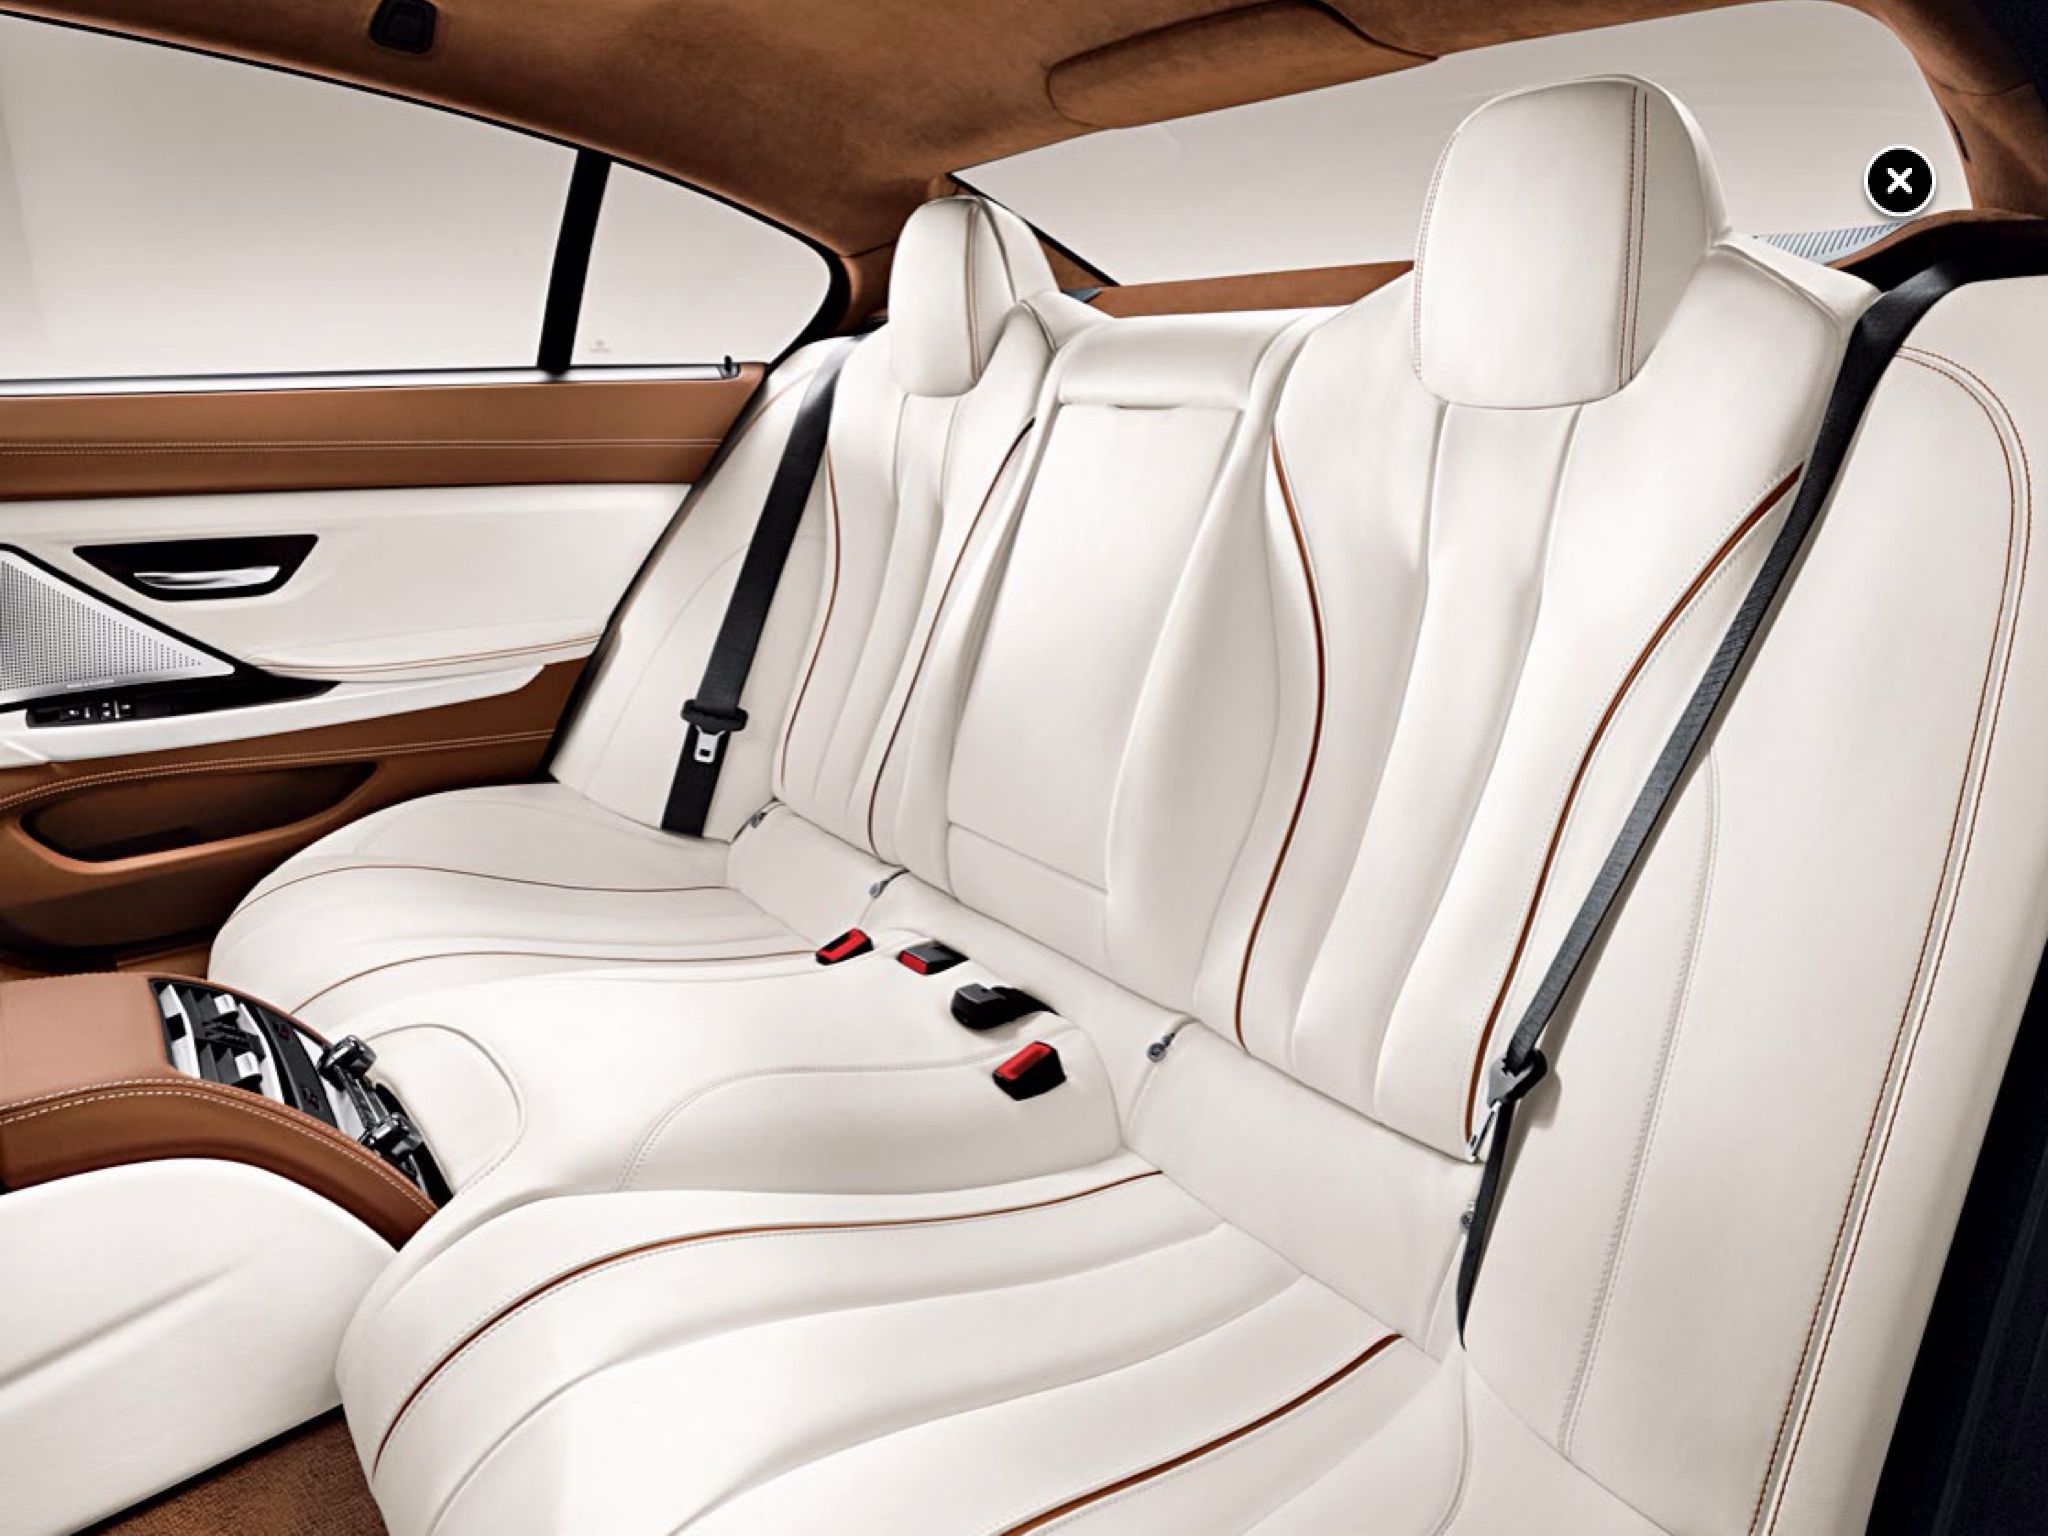 BMW M6 interior - Seats